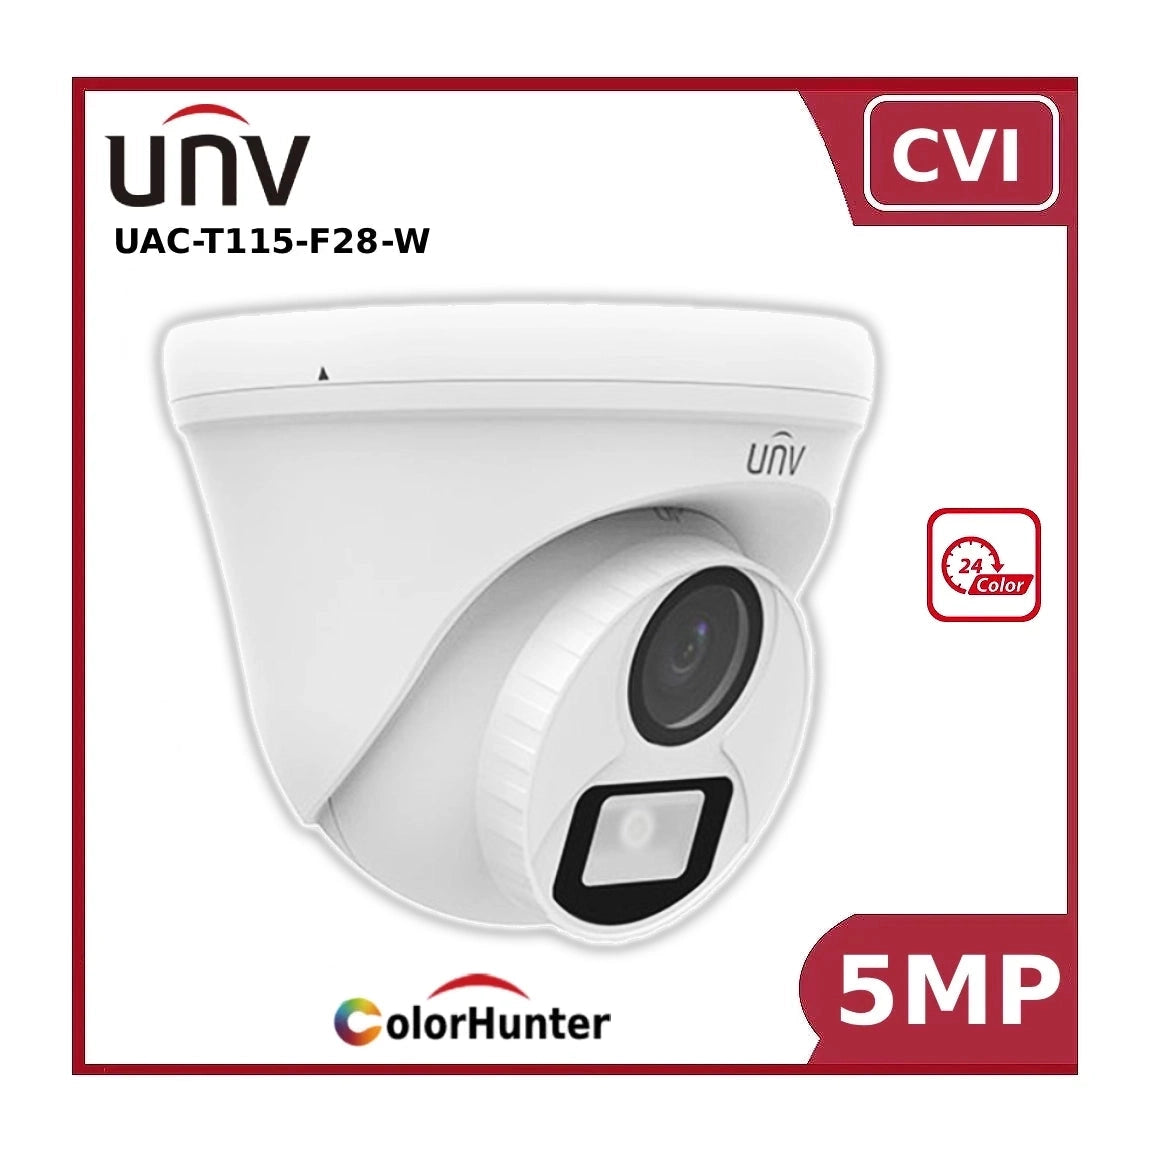 UNV 5MP 24Hr Colour CVI CCTV Kit with 4CH DVR + 4 x UAC-T115-F28-W ColourHunter Turret Cameras + 1TB HDD + PSU